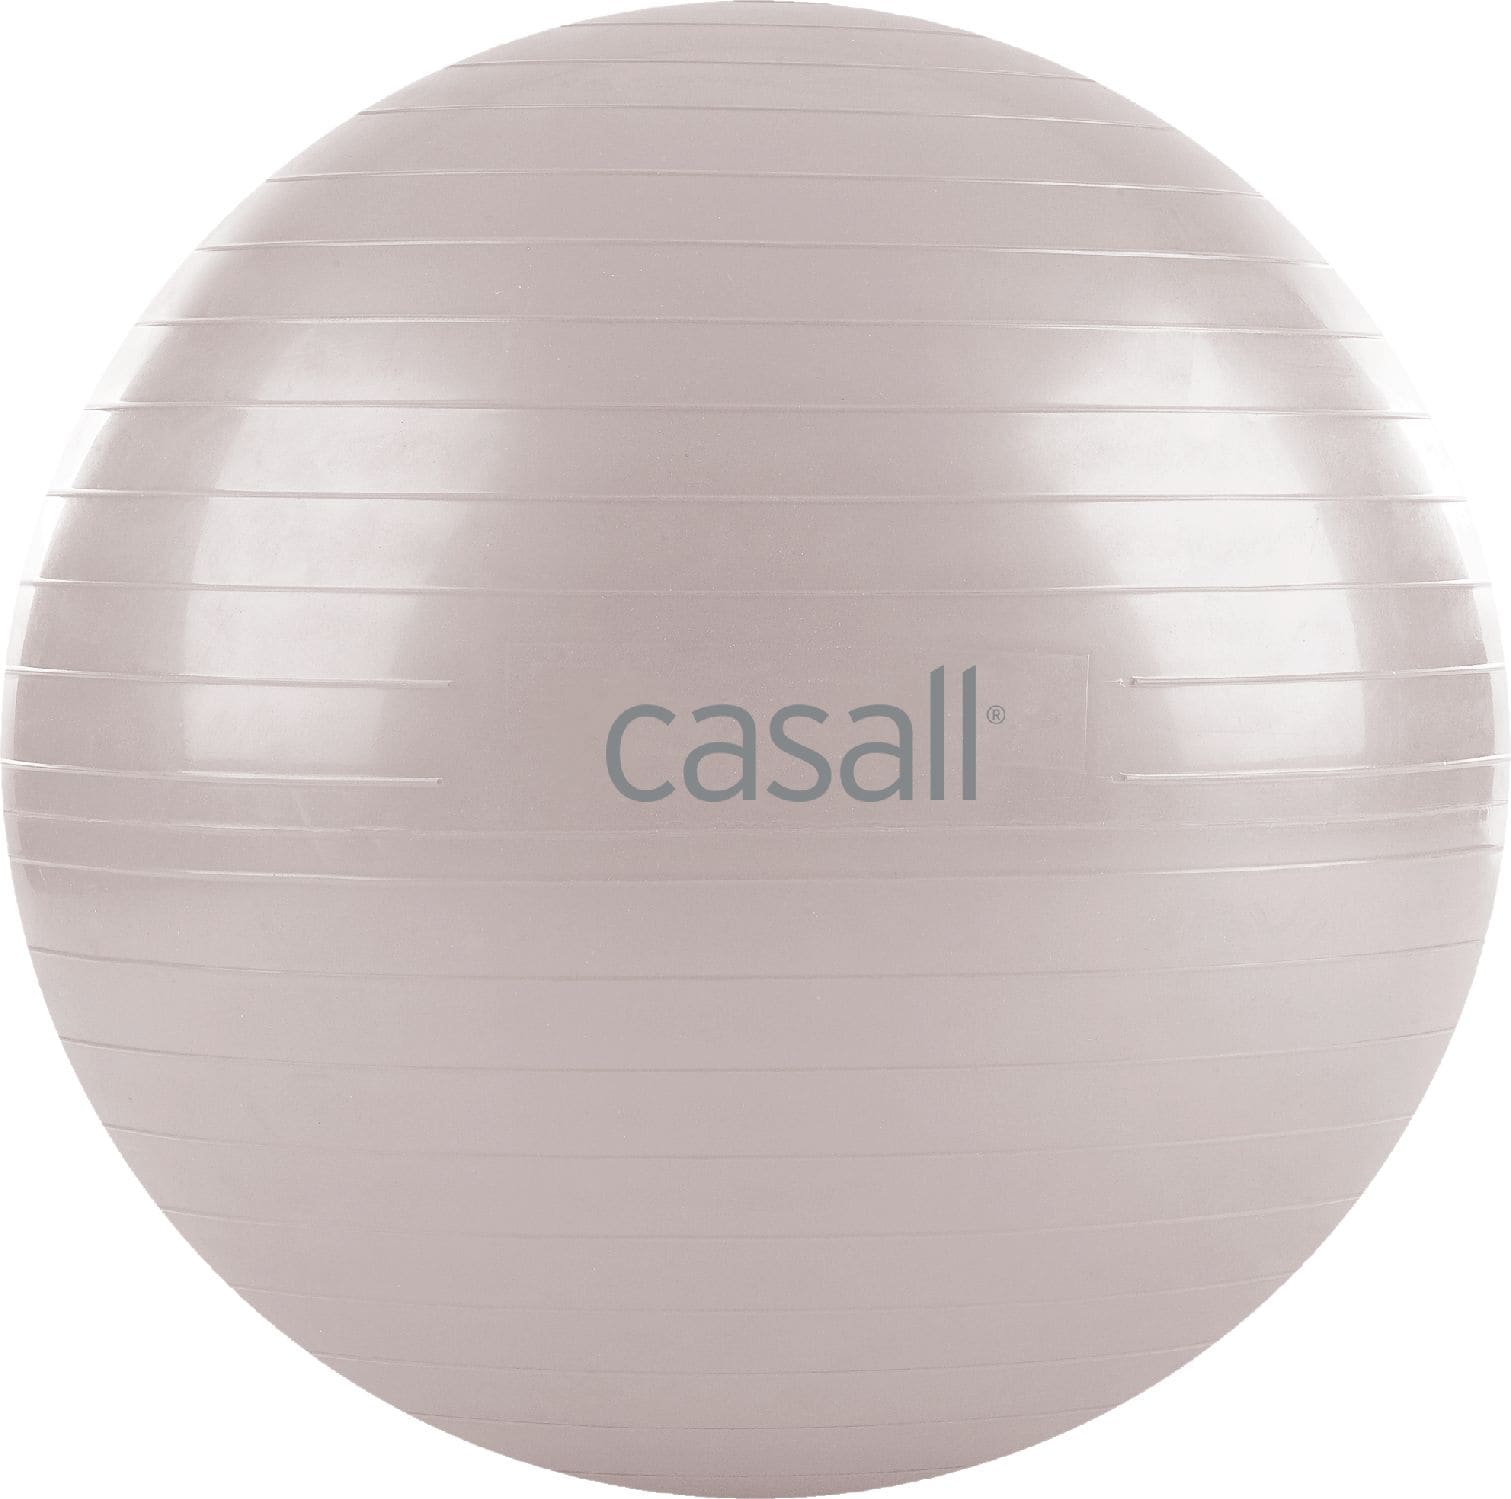 CASALL, GYM BALL 60-65 CM